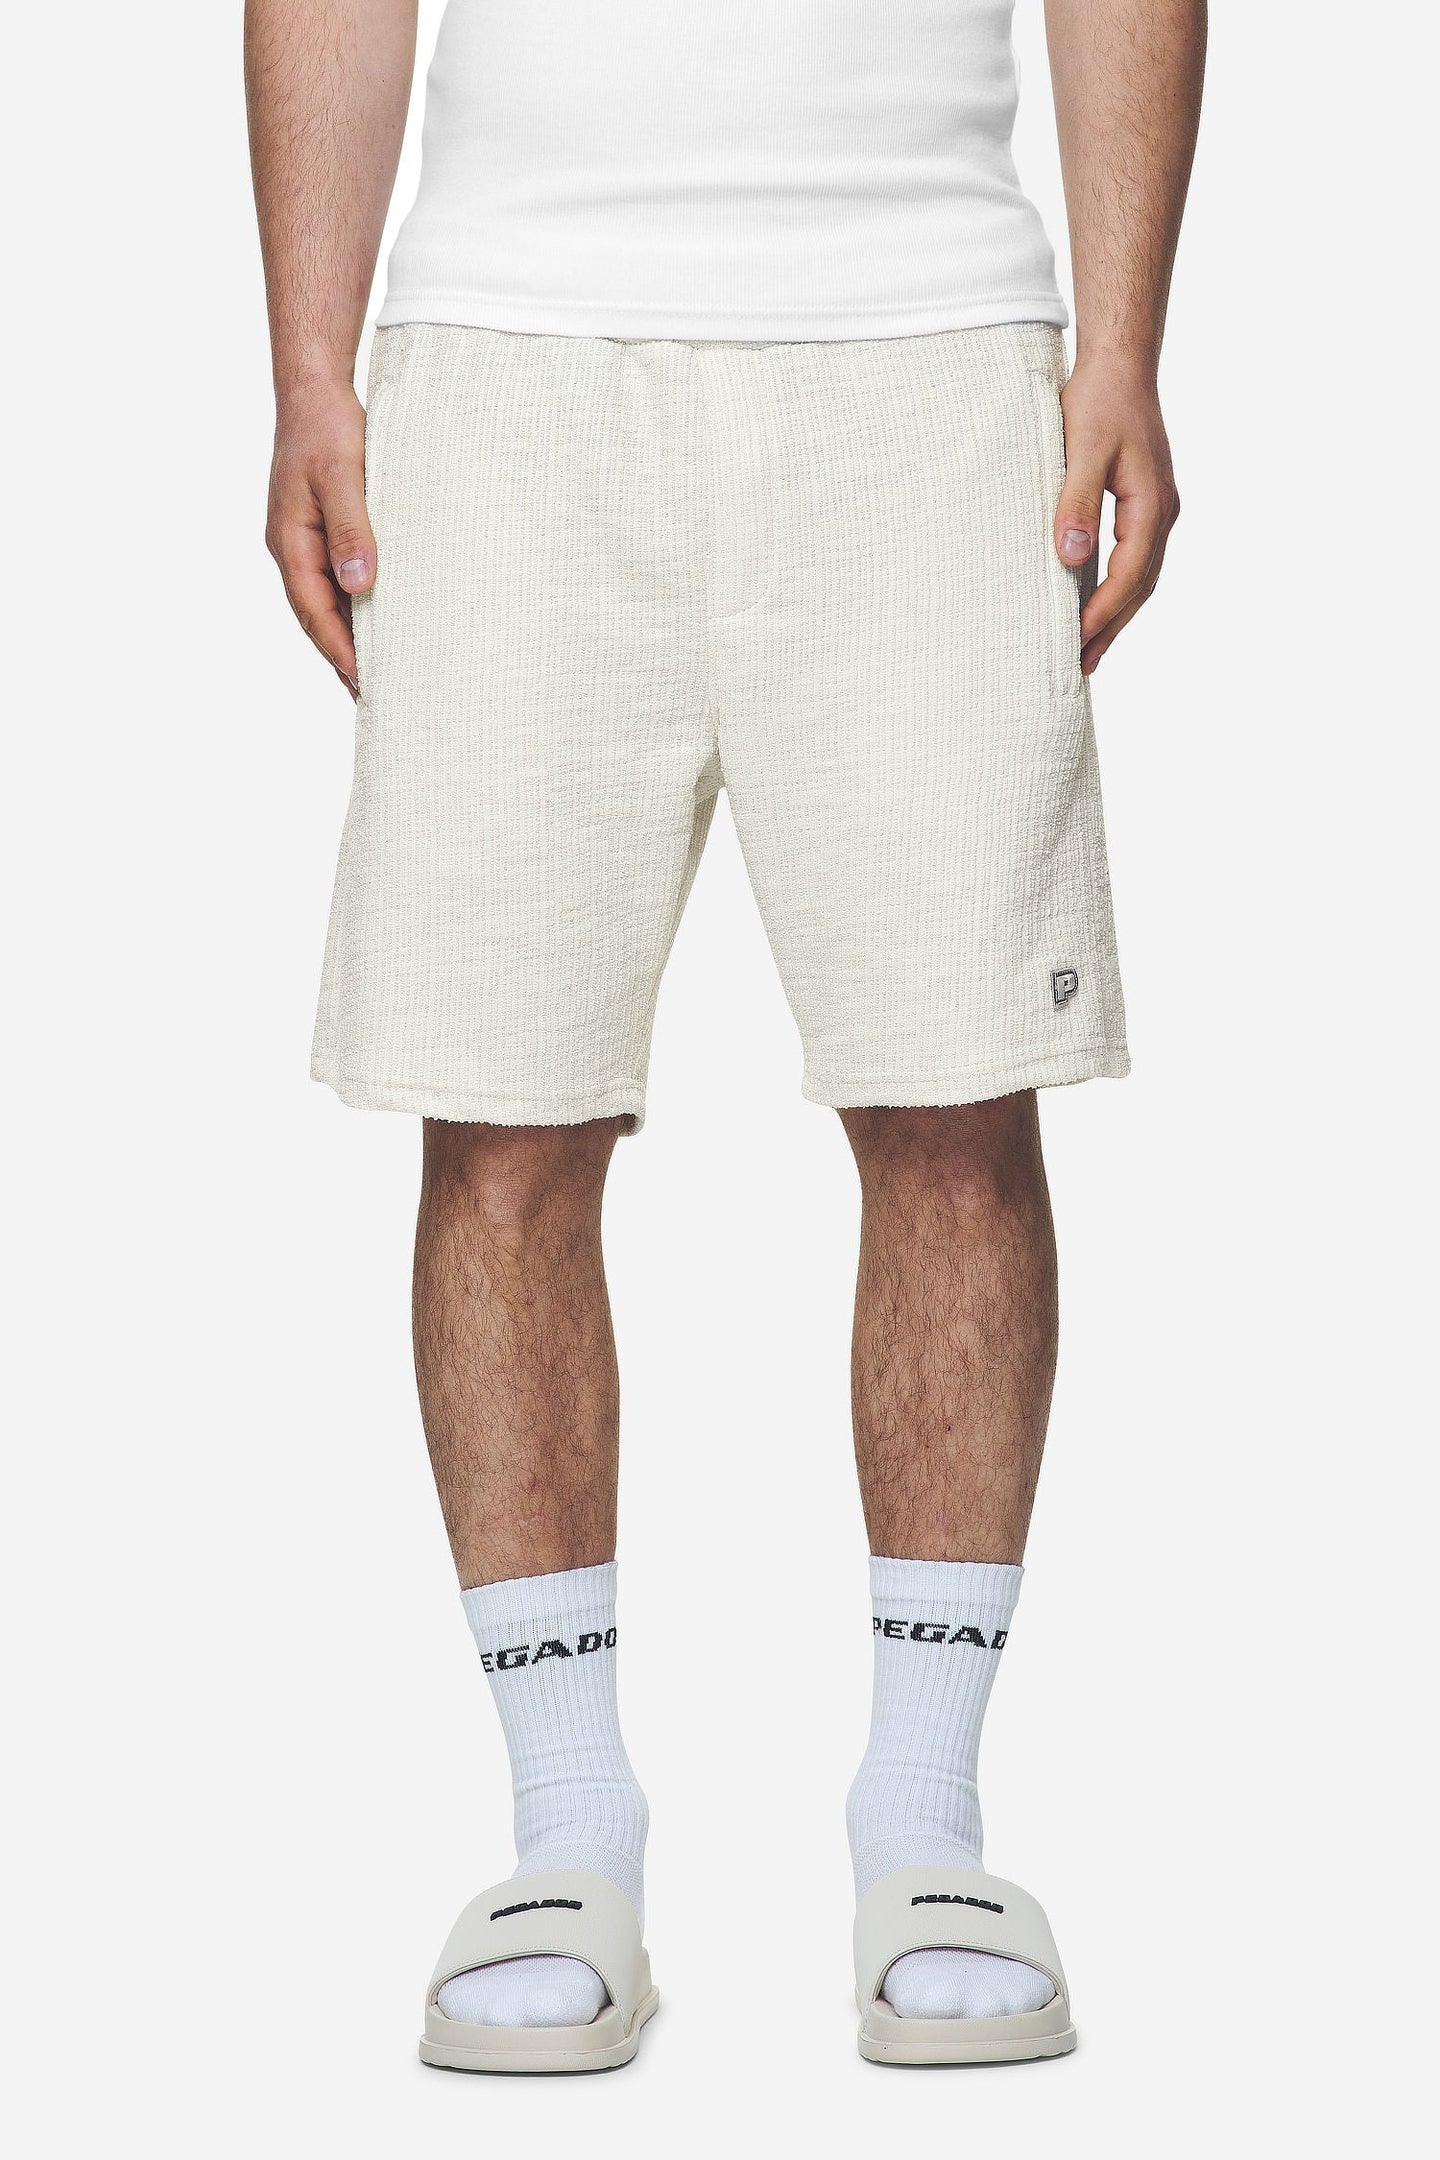 Libco Structured Knit Shorts  - Pegador - coming soon